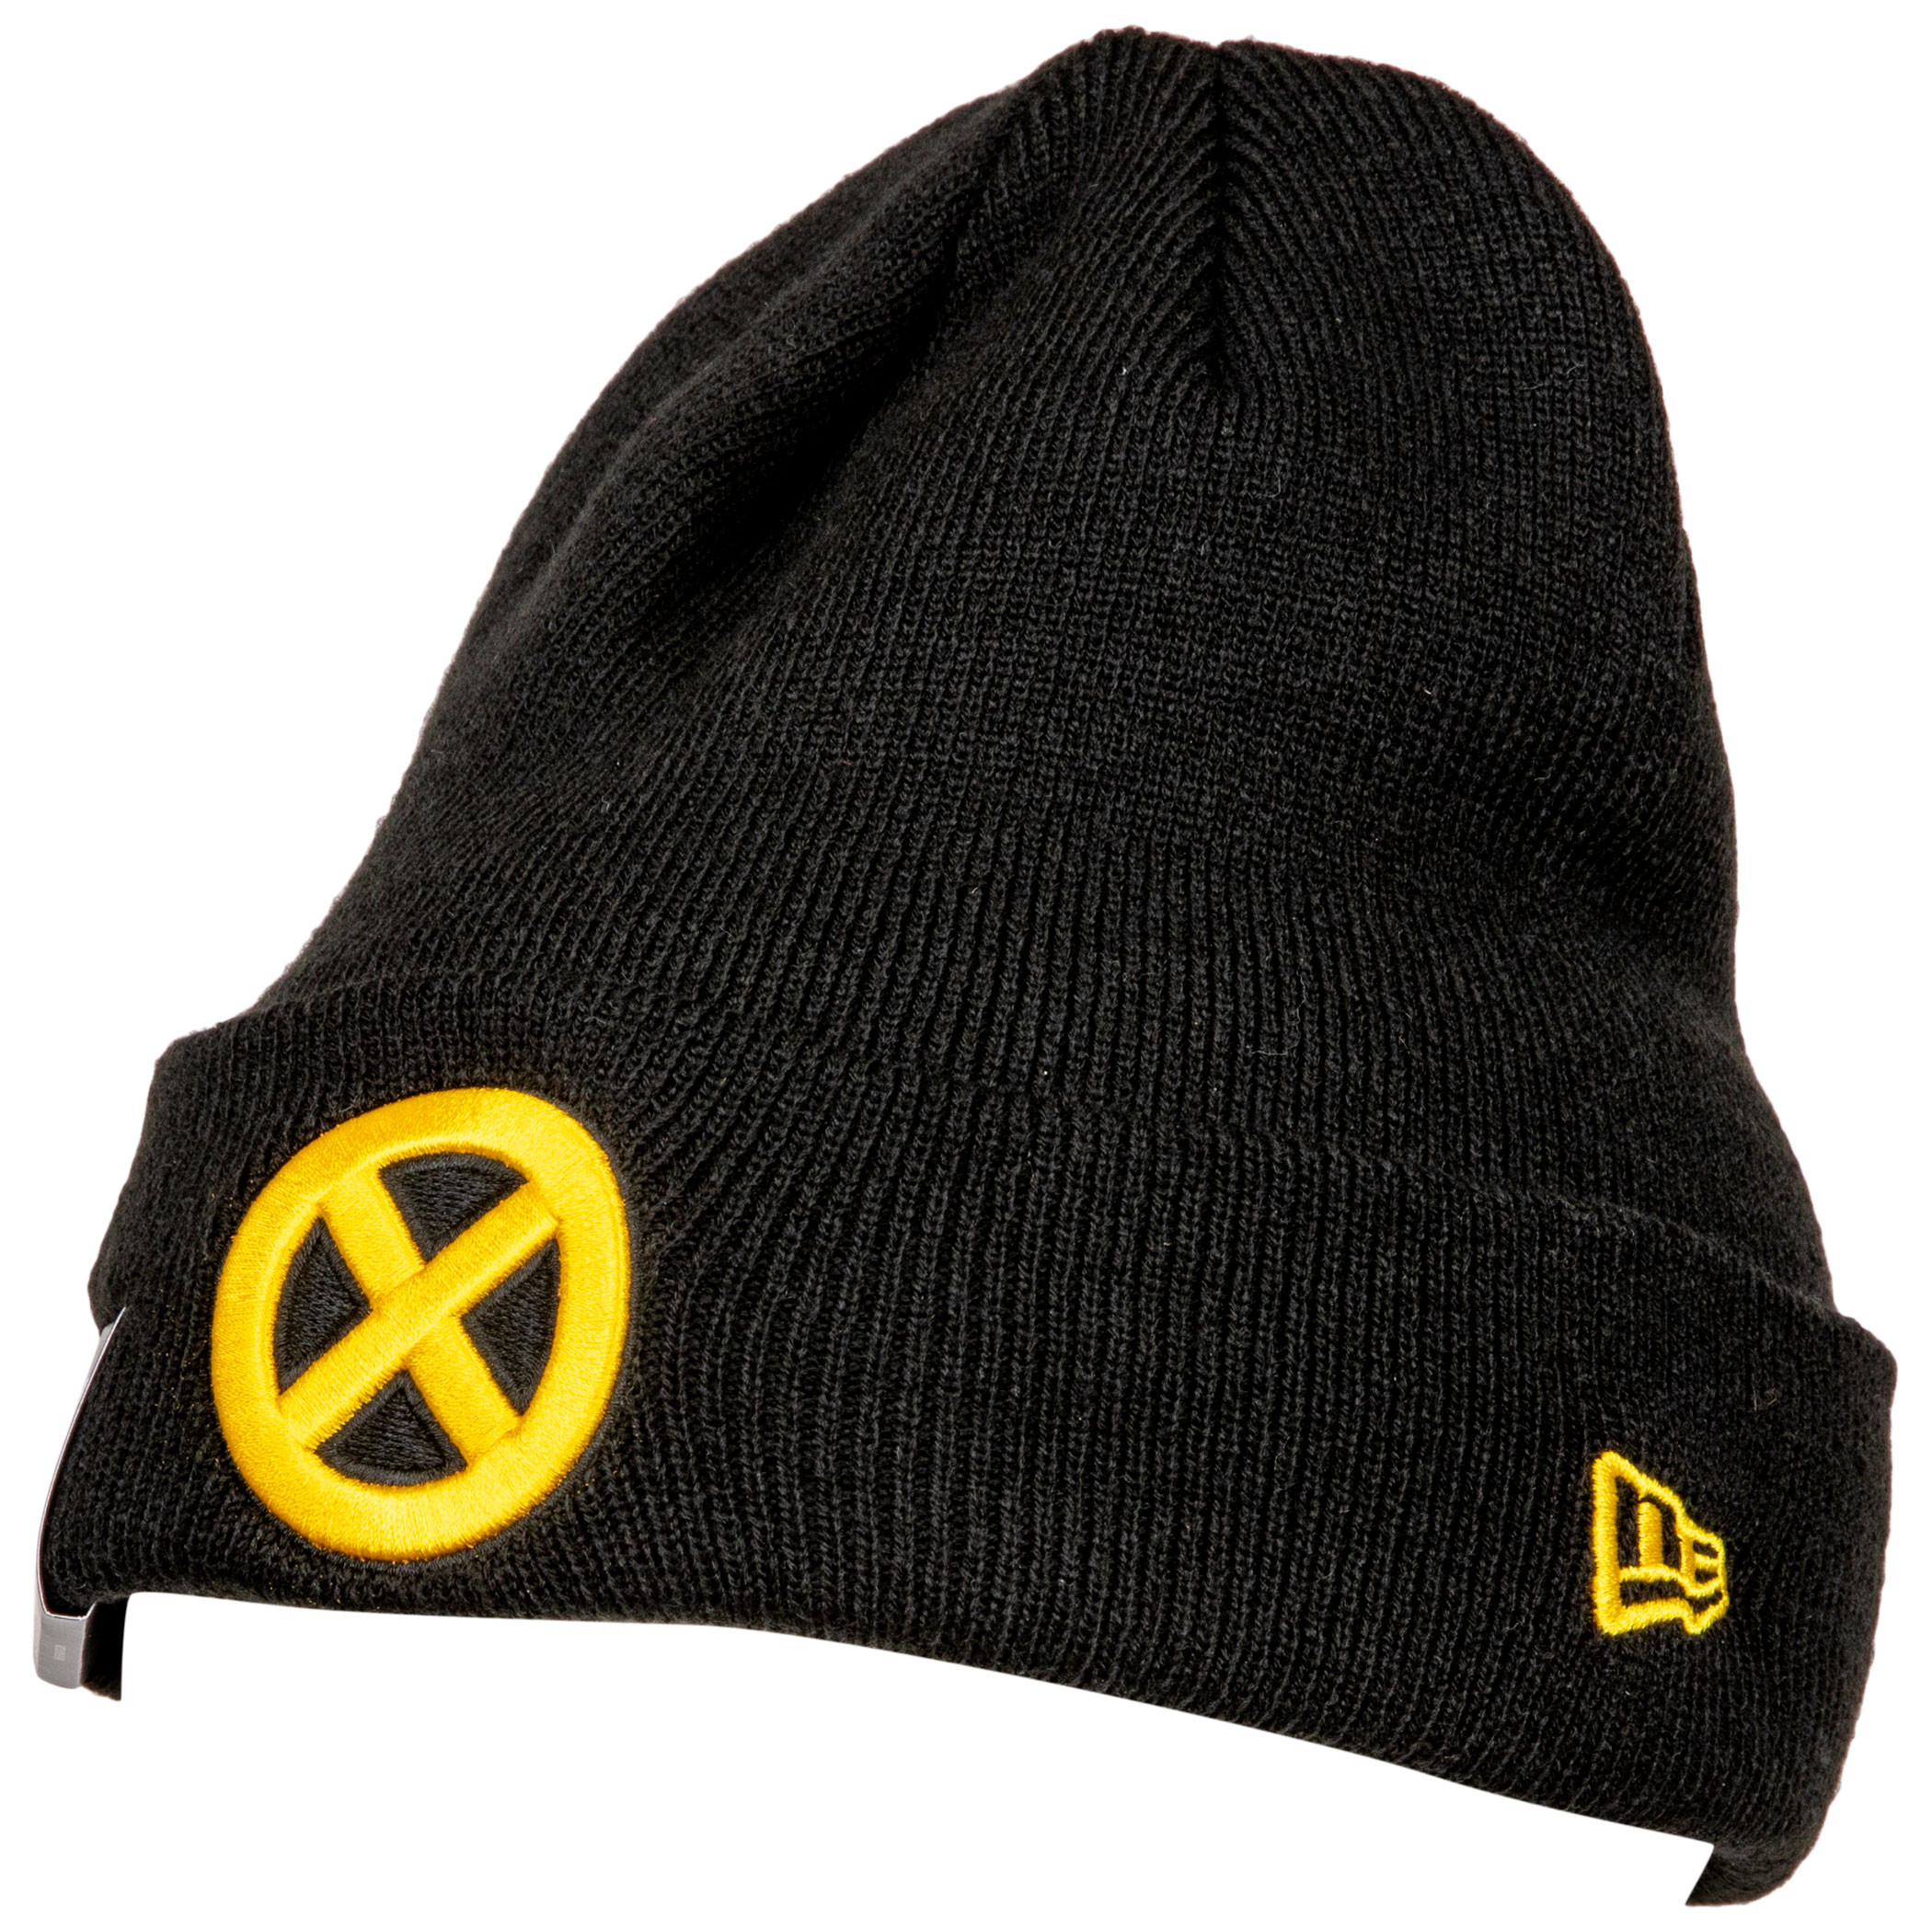 X-Men Yellow Symbol Cuff Knit New Era Beanie